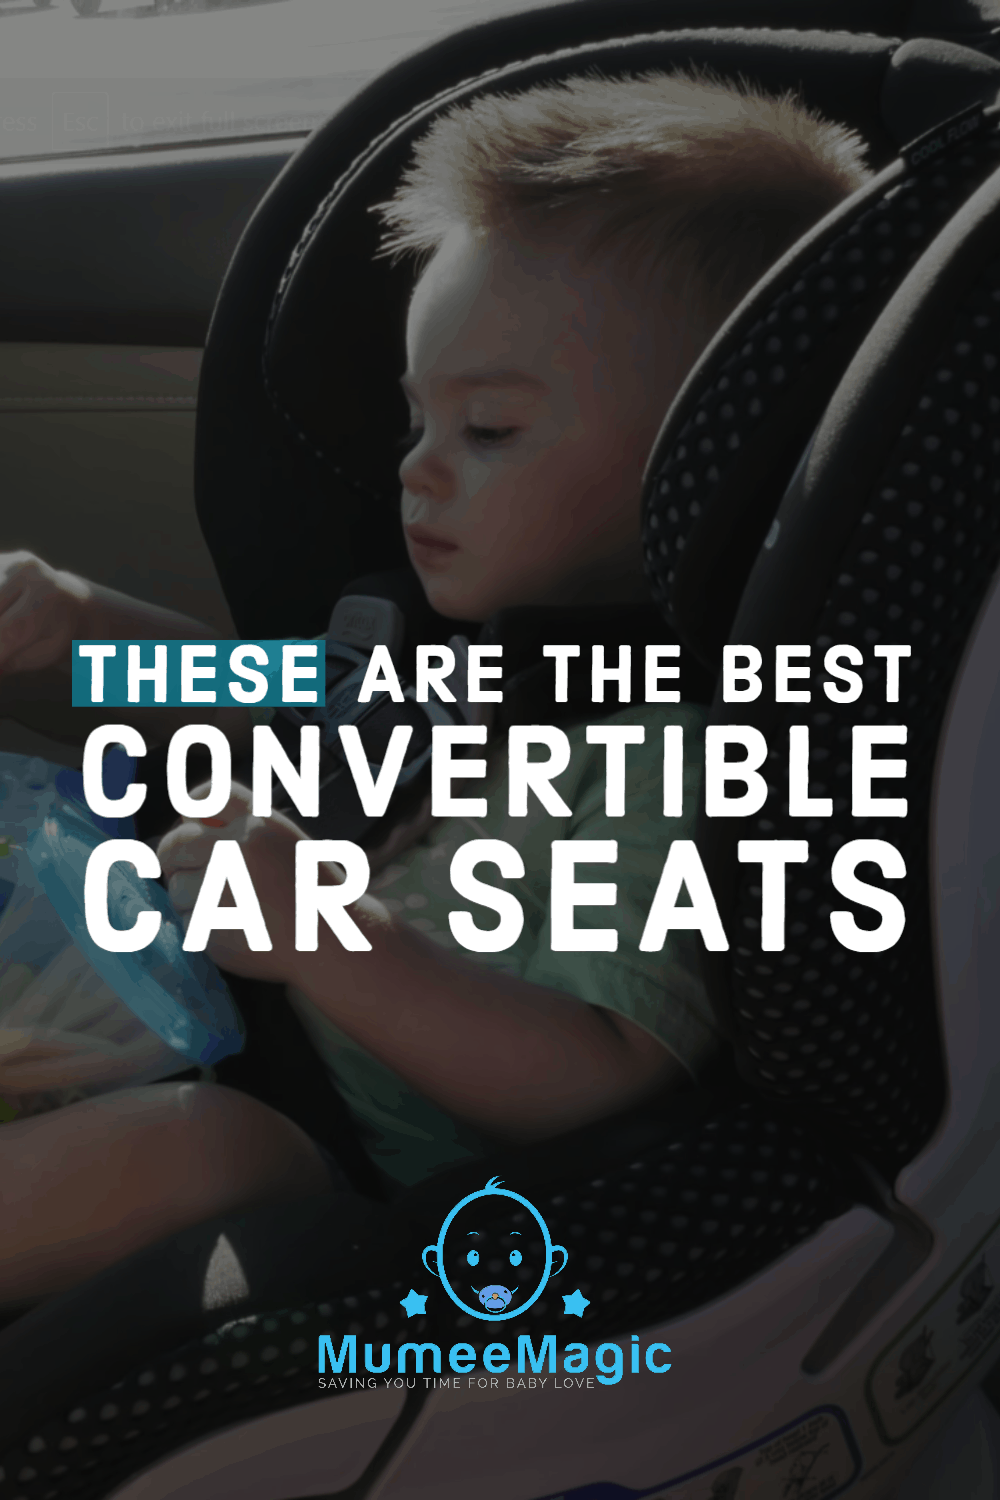 15 Best Convertible Car Seats For Tall Babies in 2019 - MumeeMagic